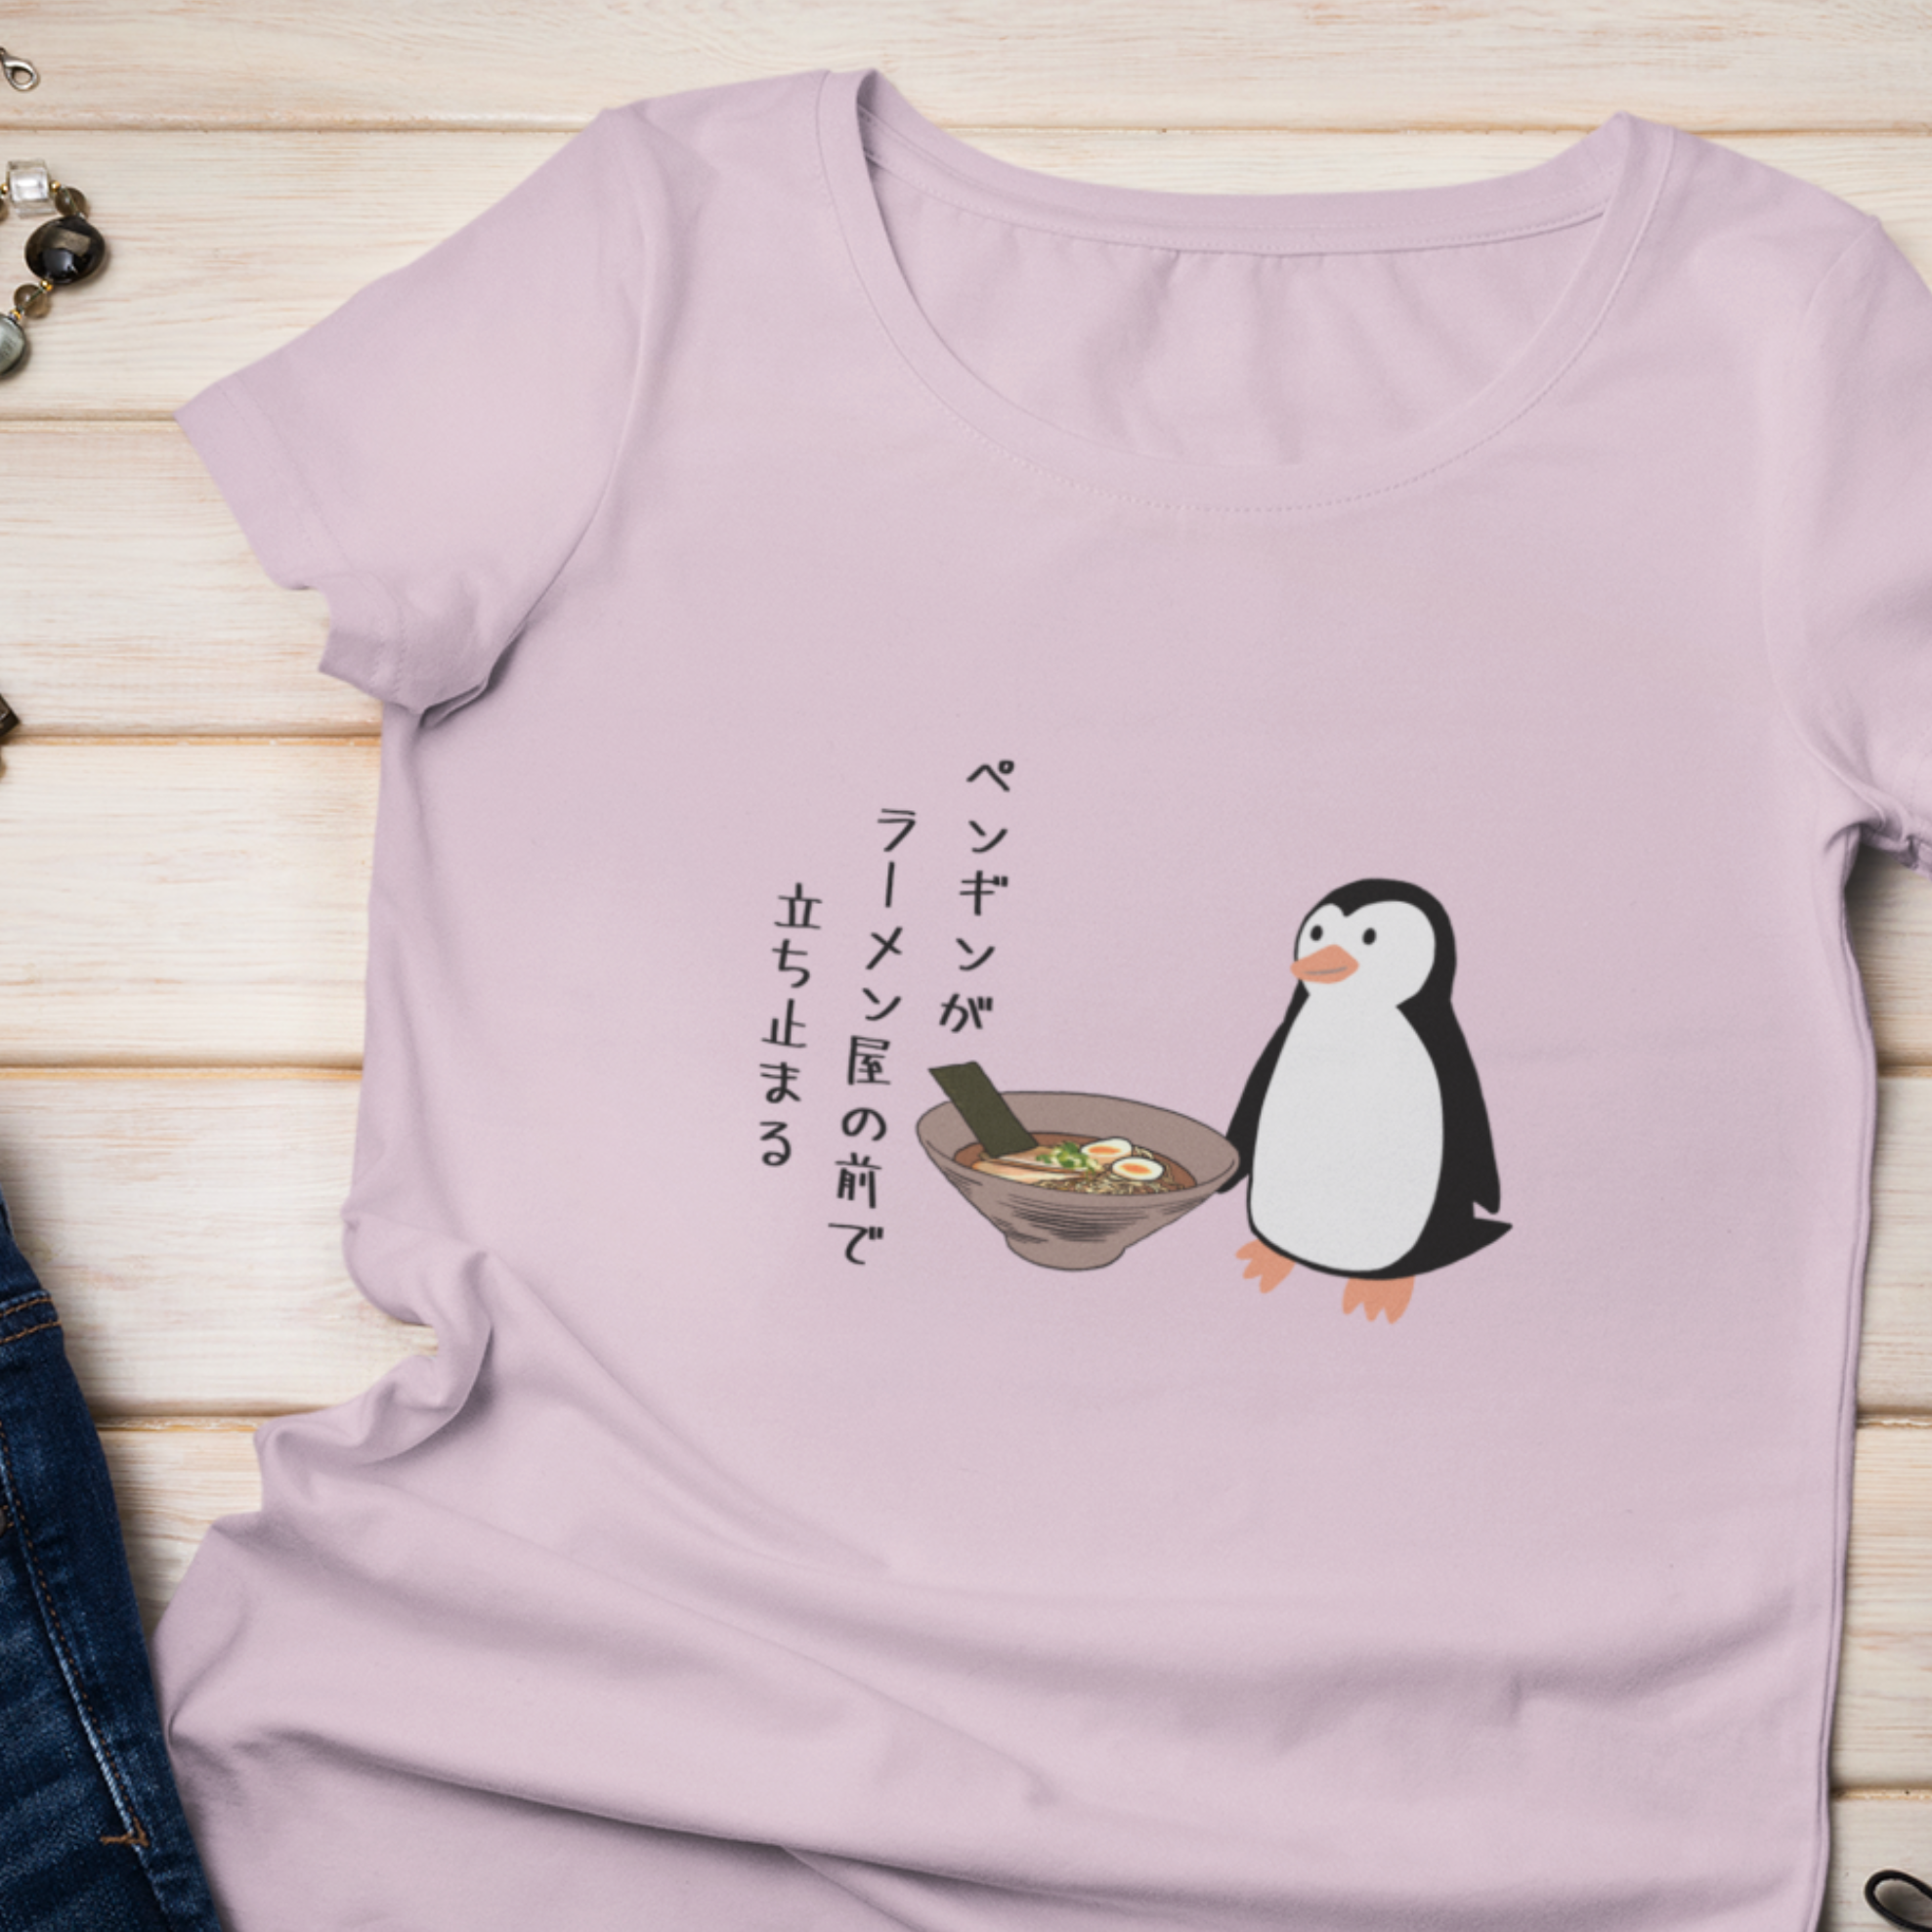 Ramen T-shirt: Penguin's Pause at the Japanese Ramen Shop - Haiku Inspired Foodie Shirt with Ramen Art